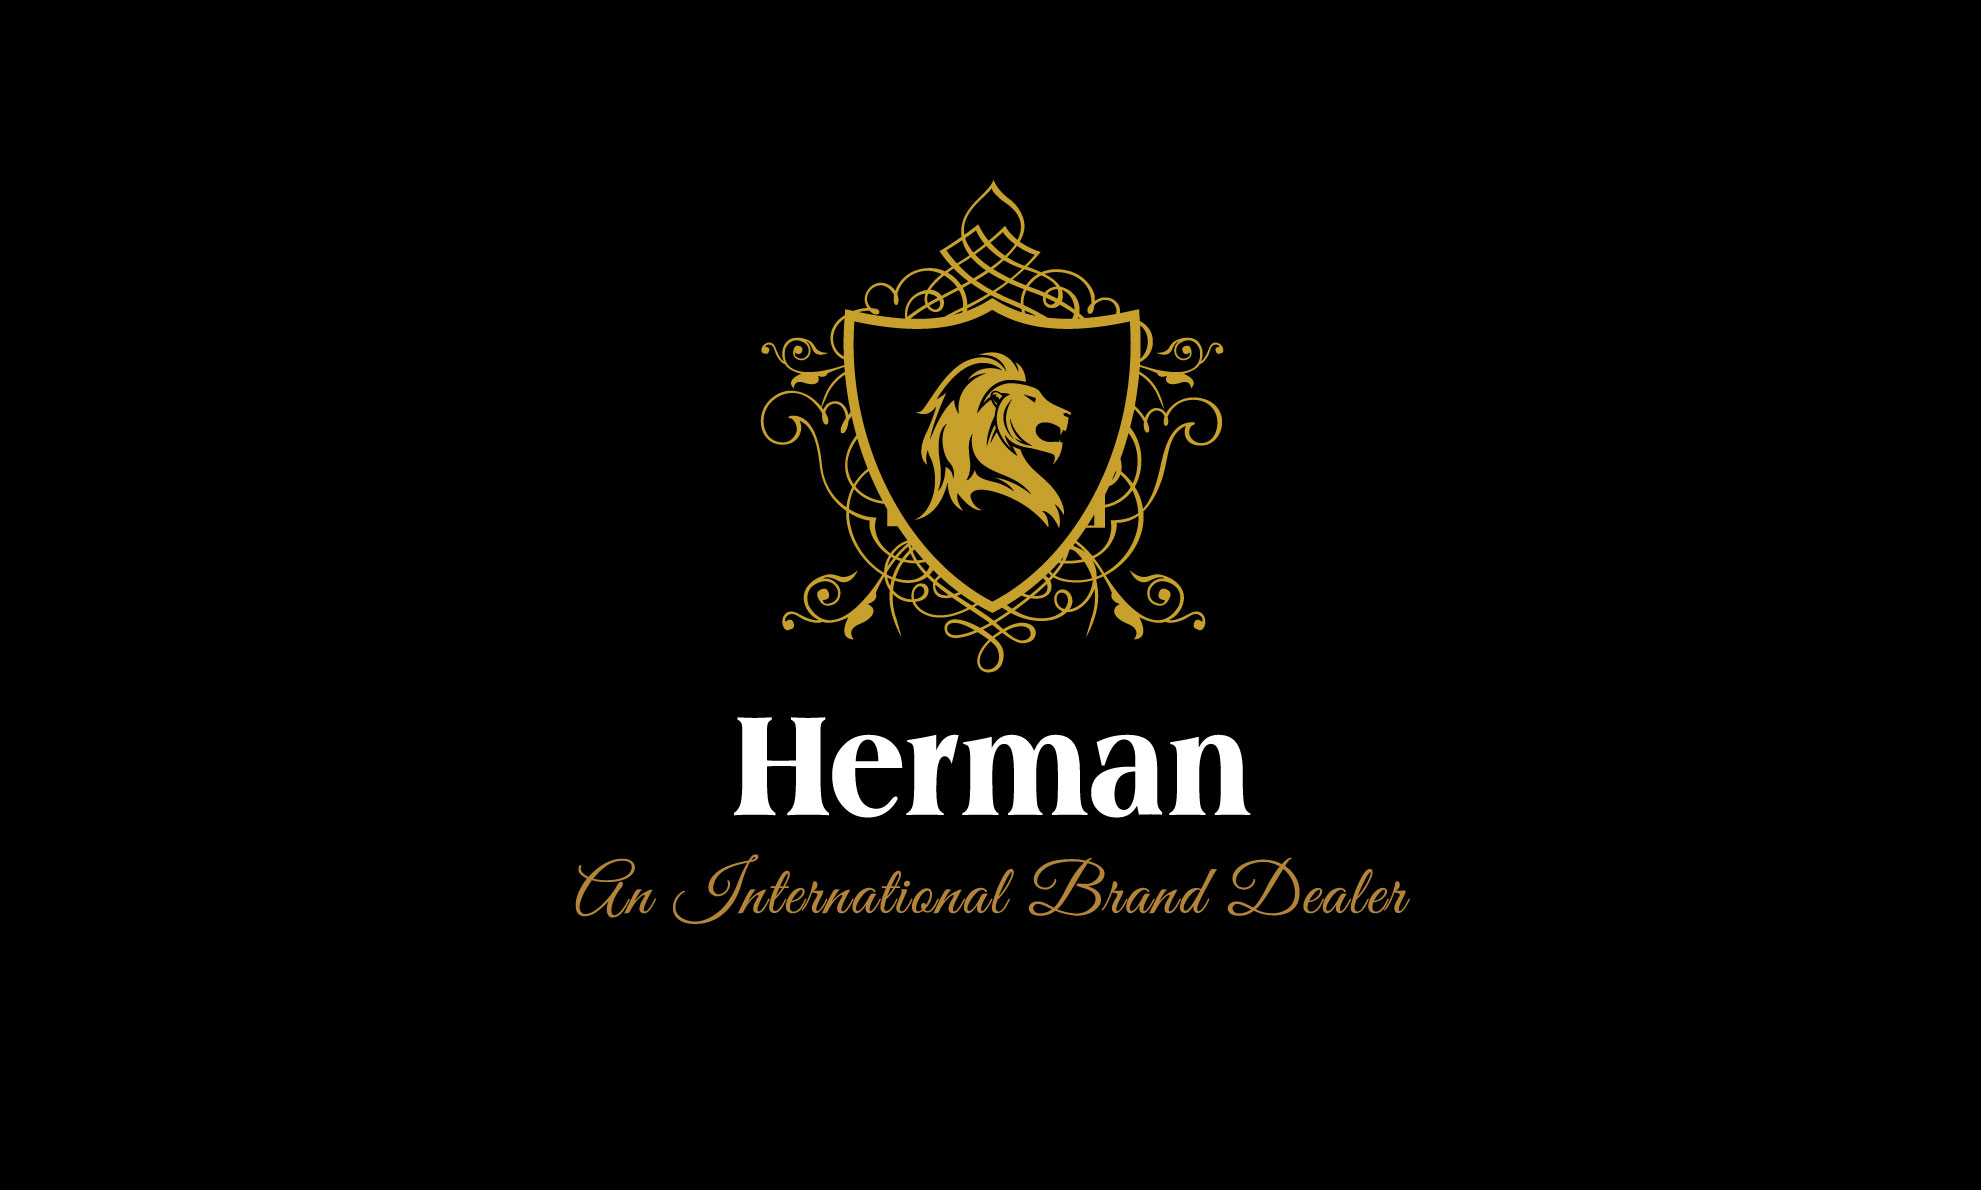 Herman International